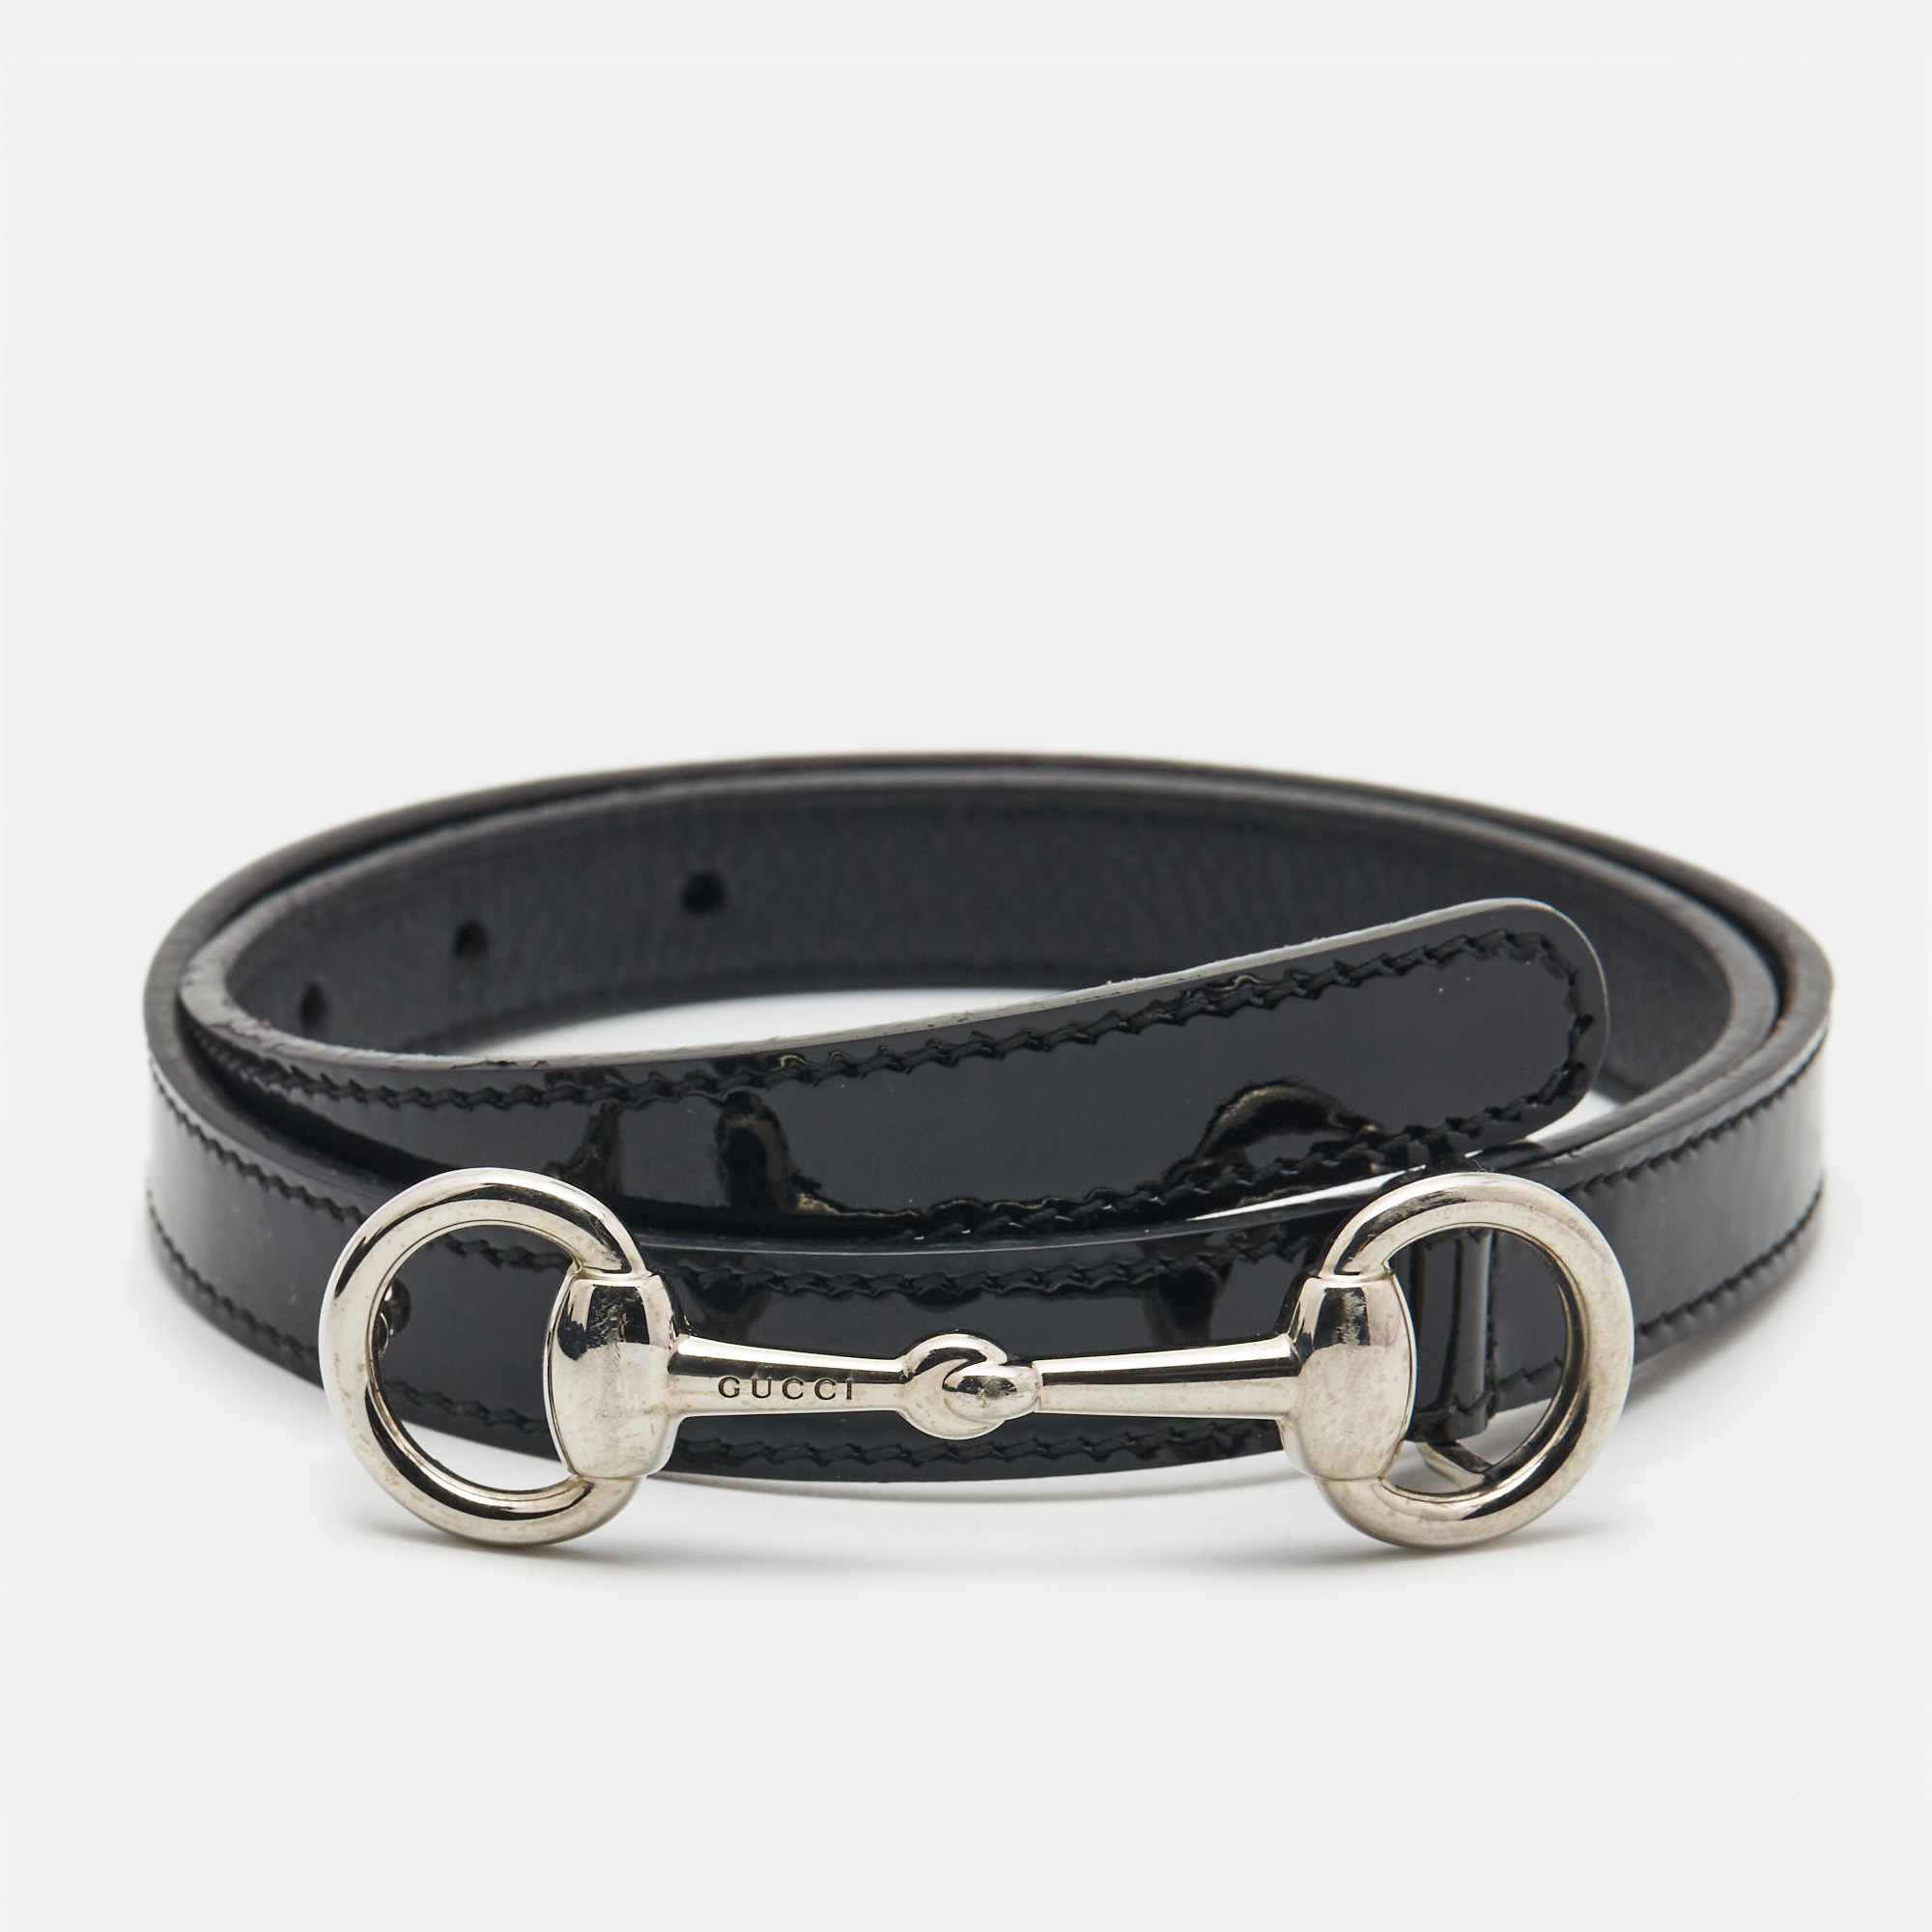 Gucci black patent leather horsebit slim belt m